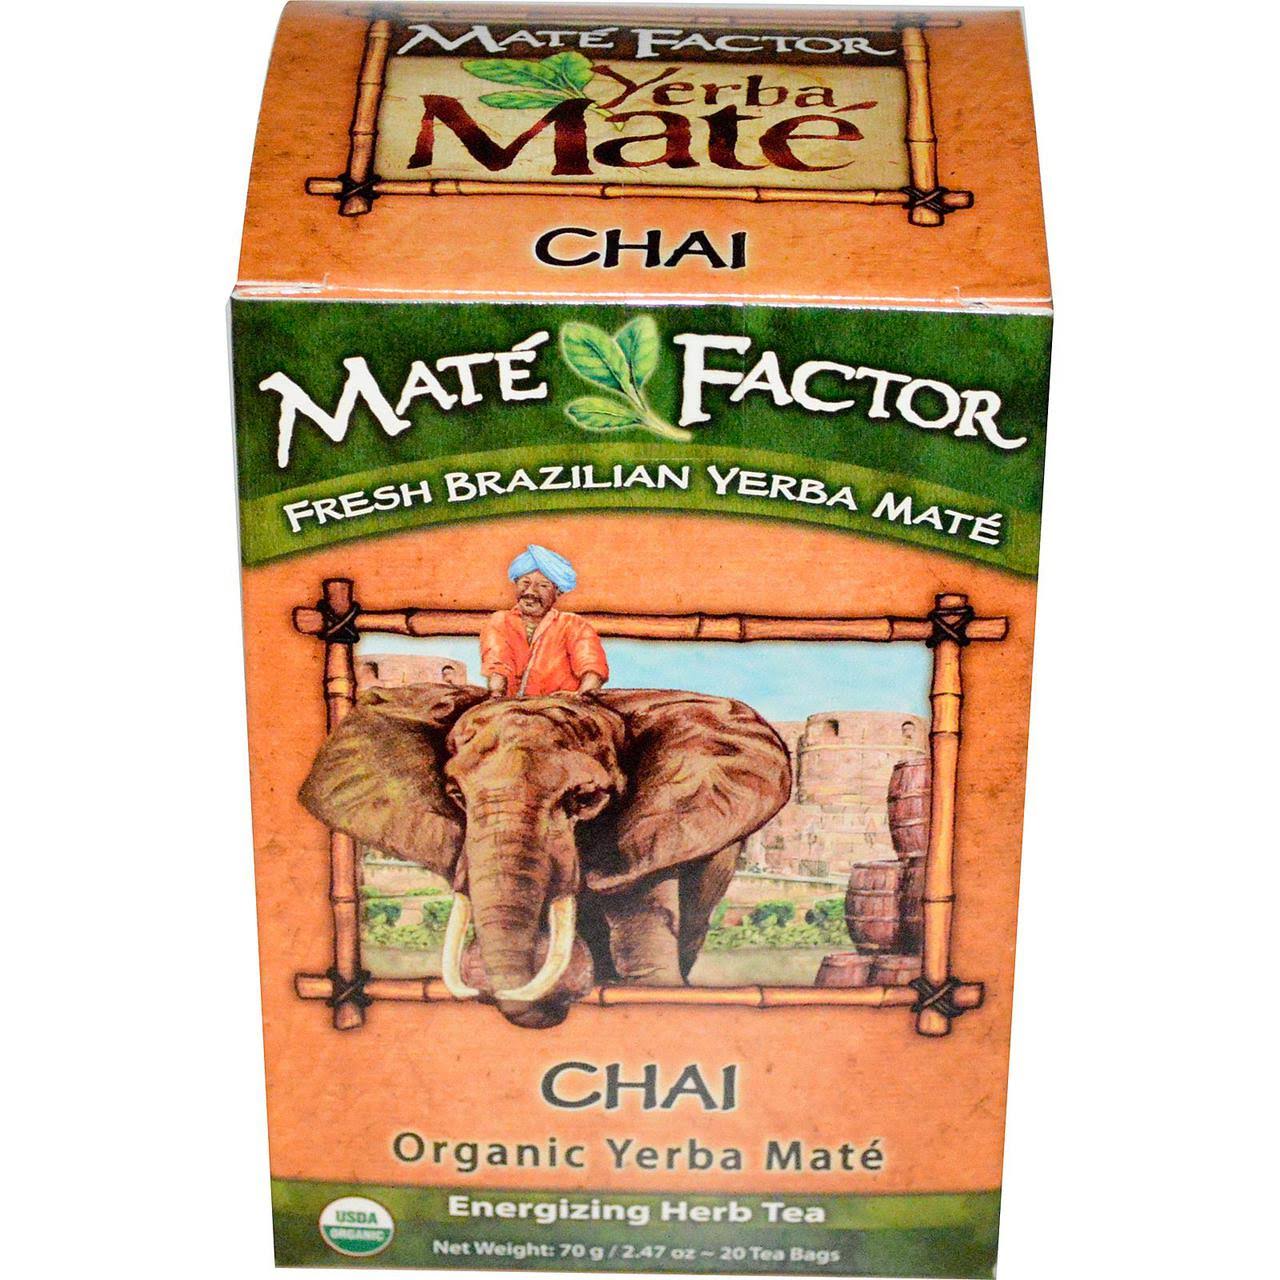 Mate Factor Organic Yerba Mate Chai Tea Bags - 2.47oz, 20ct